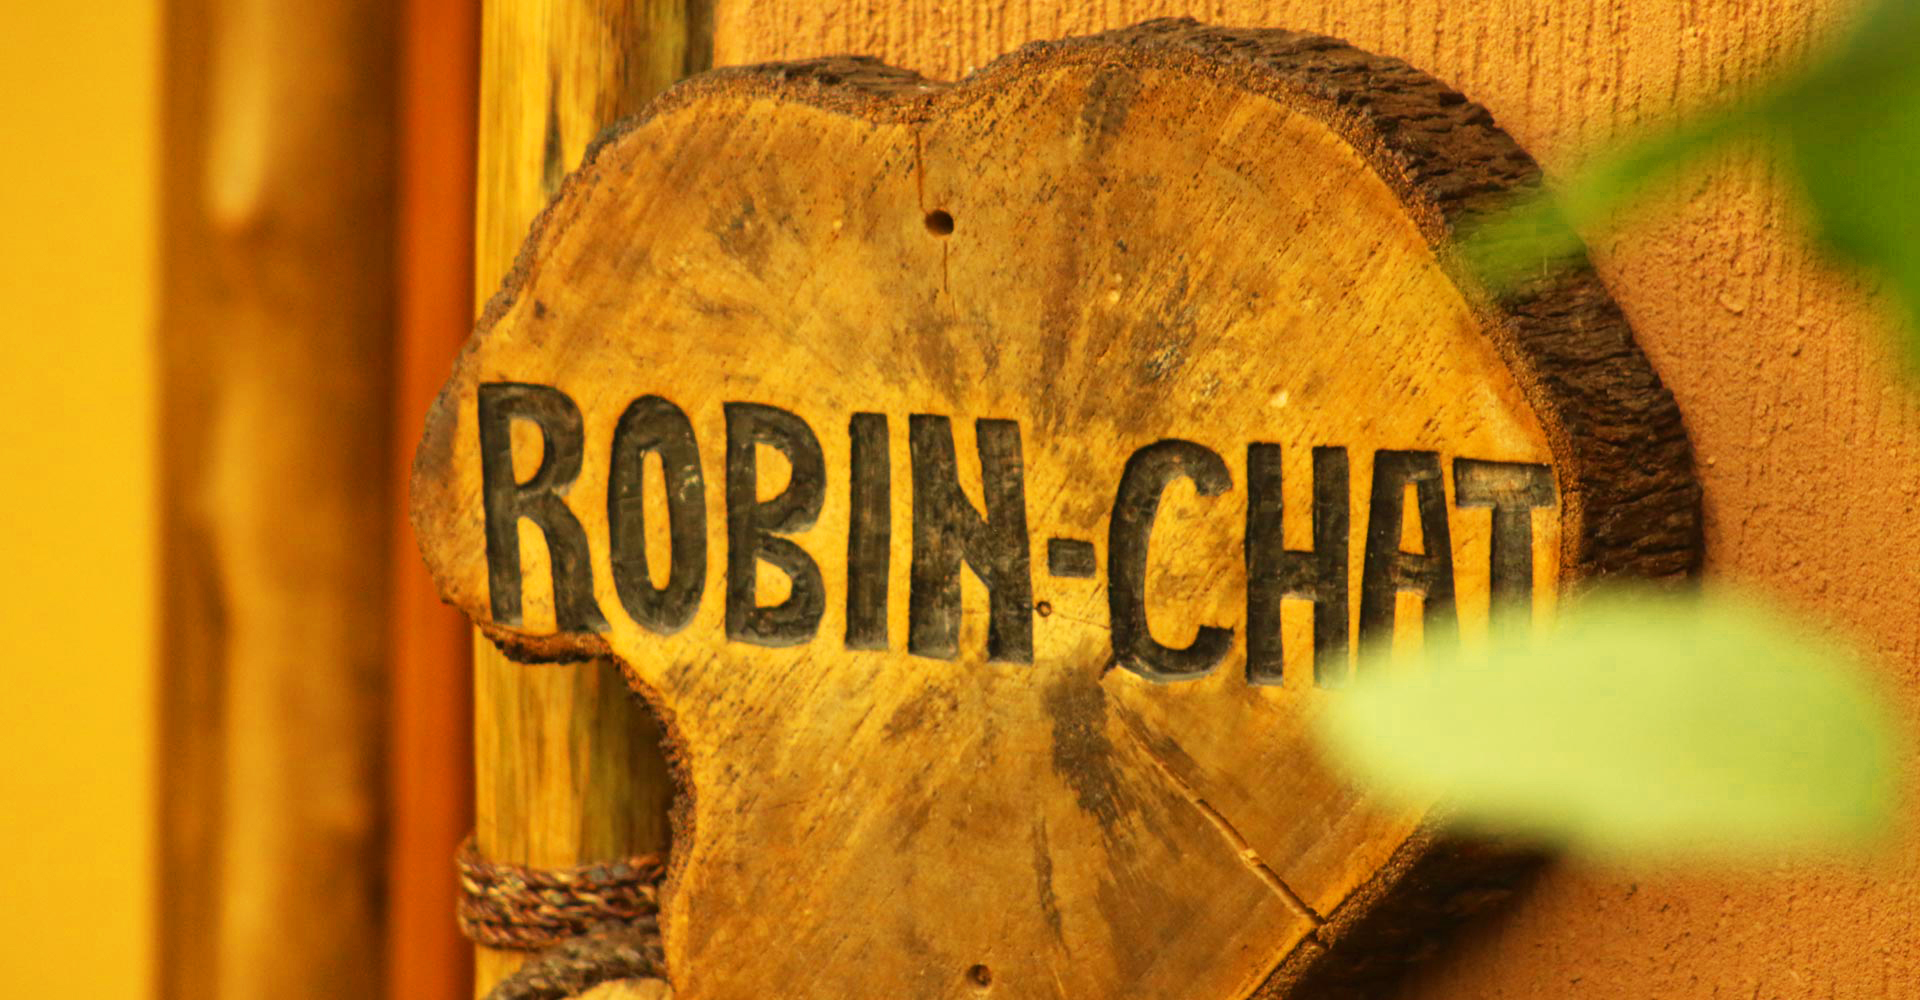 Robin-chat Cottage